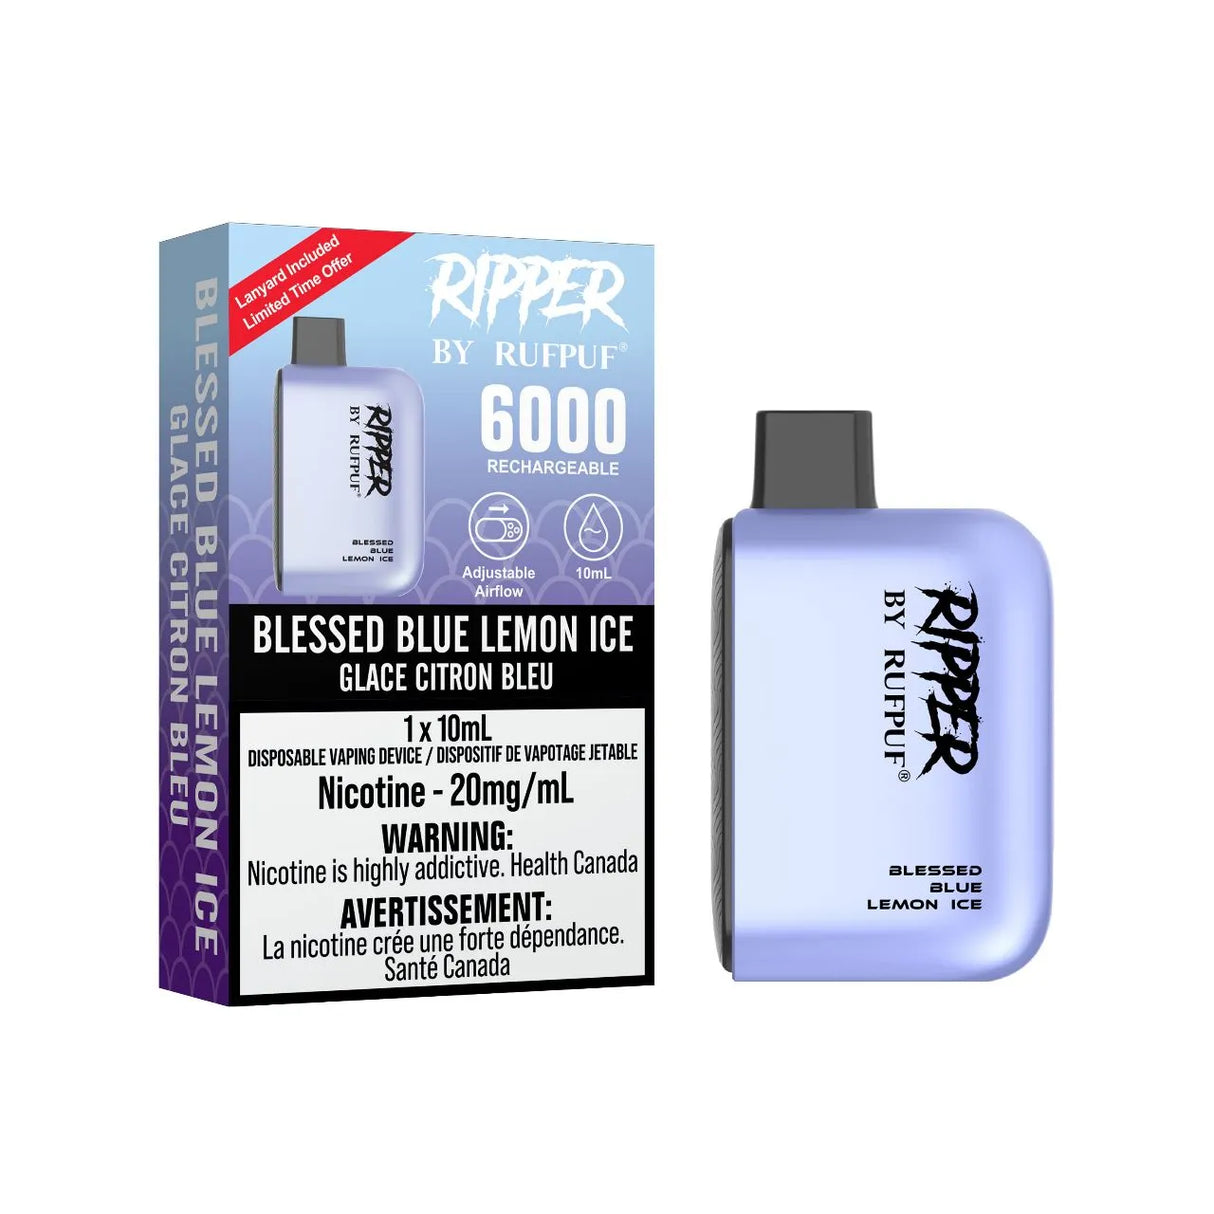 Blessed Blue Lemon Ice - Rufpuf Ripper 6000